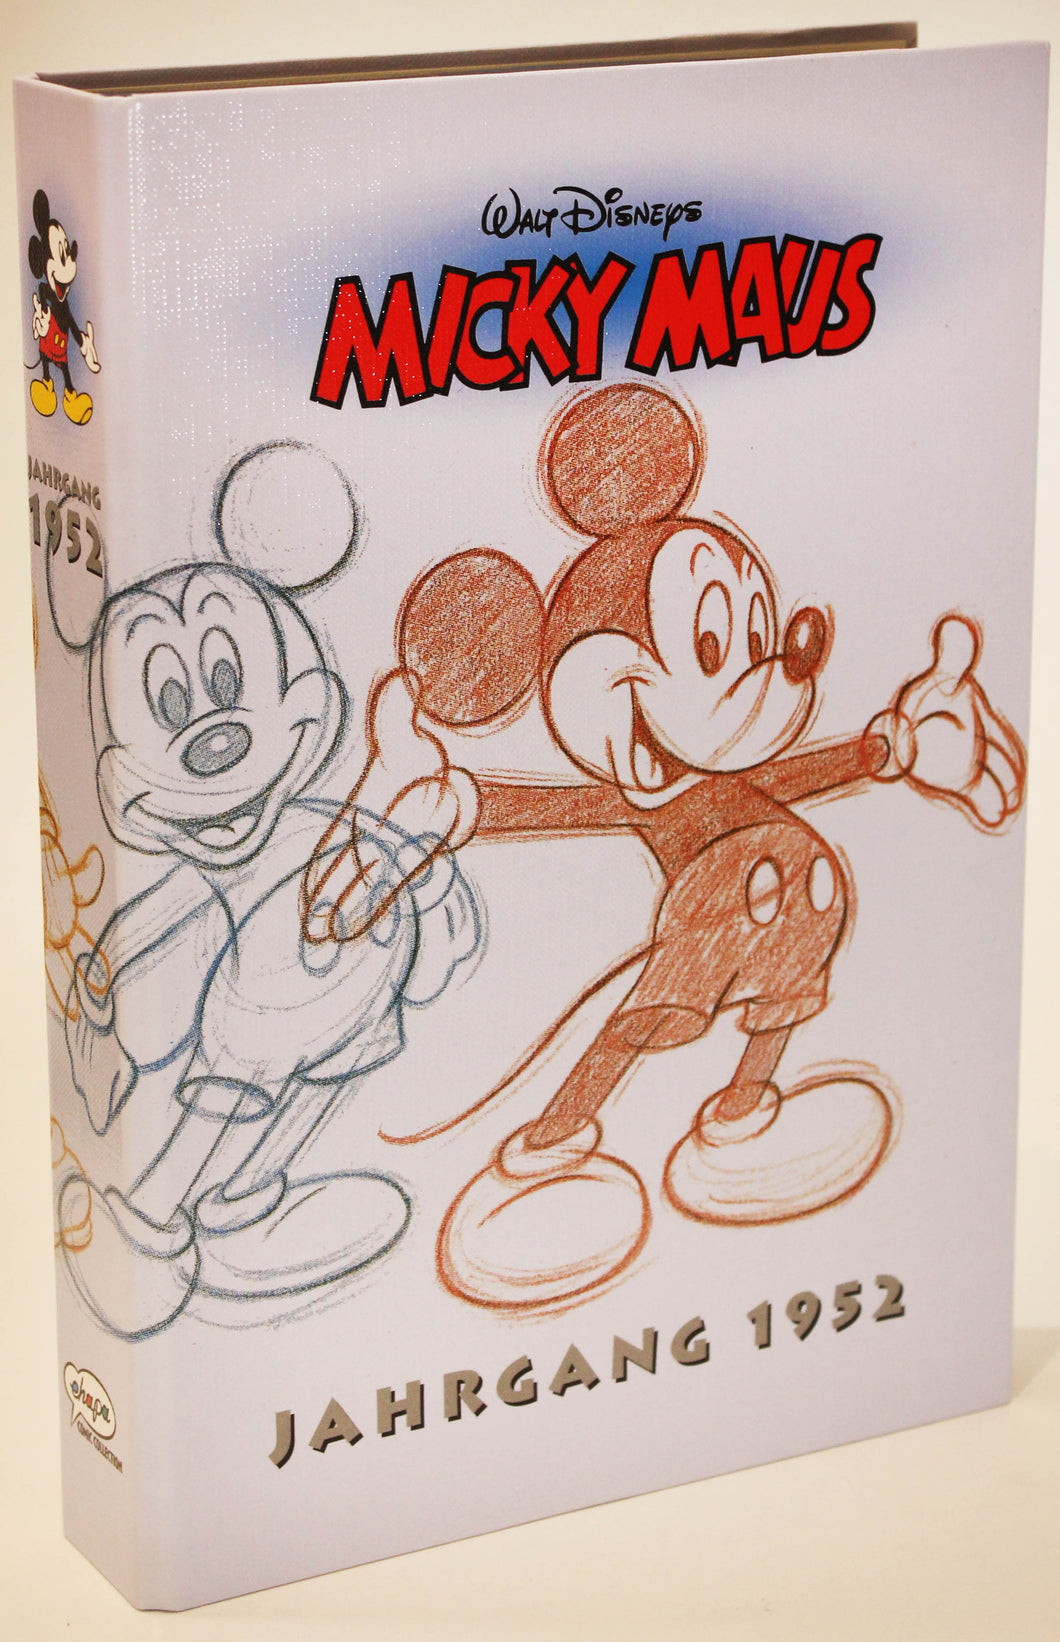 Micky Maus Reprintkassette - Jahrgang 1952